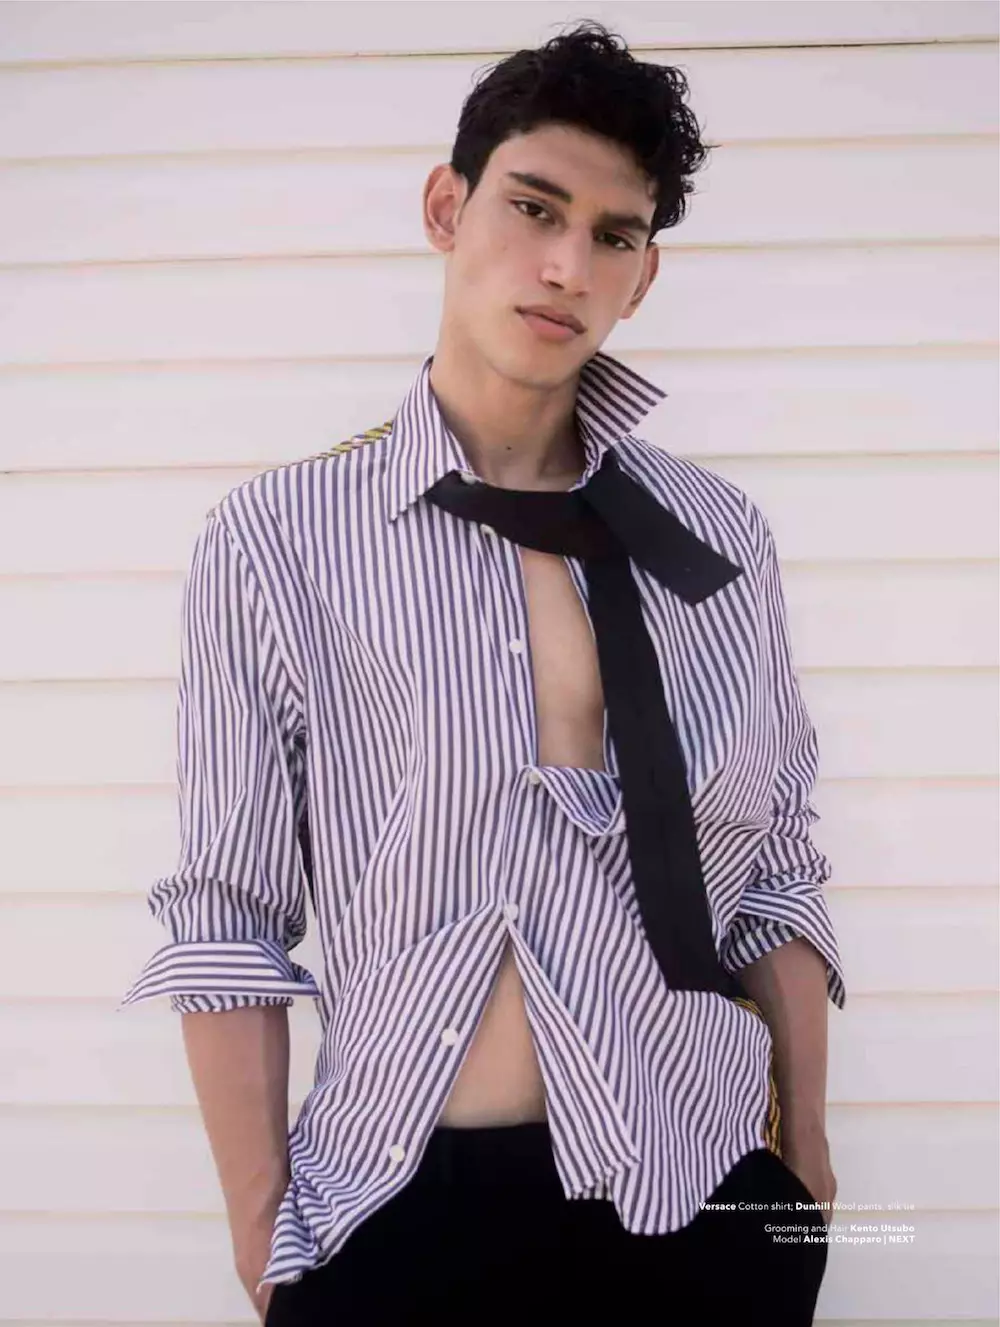 Model Alexis Chapparo od Brent Chua za Men's Folio Singapur 58599_12